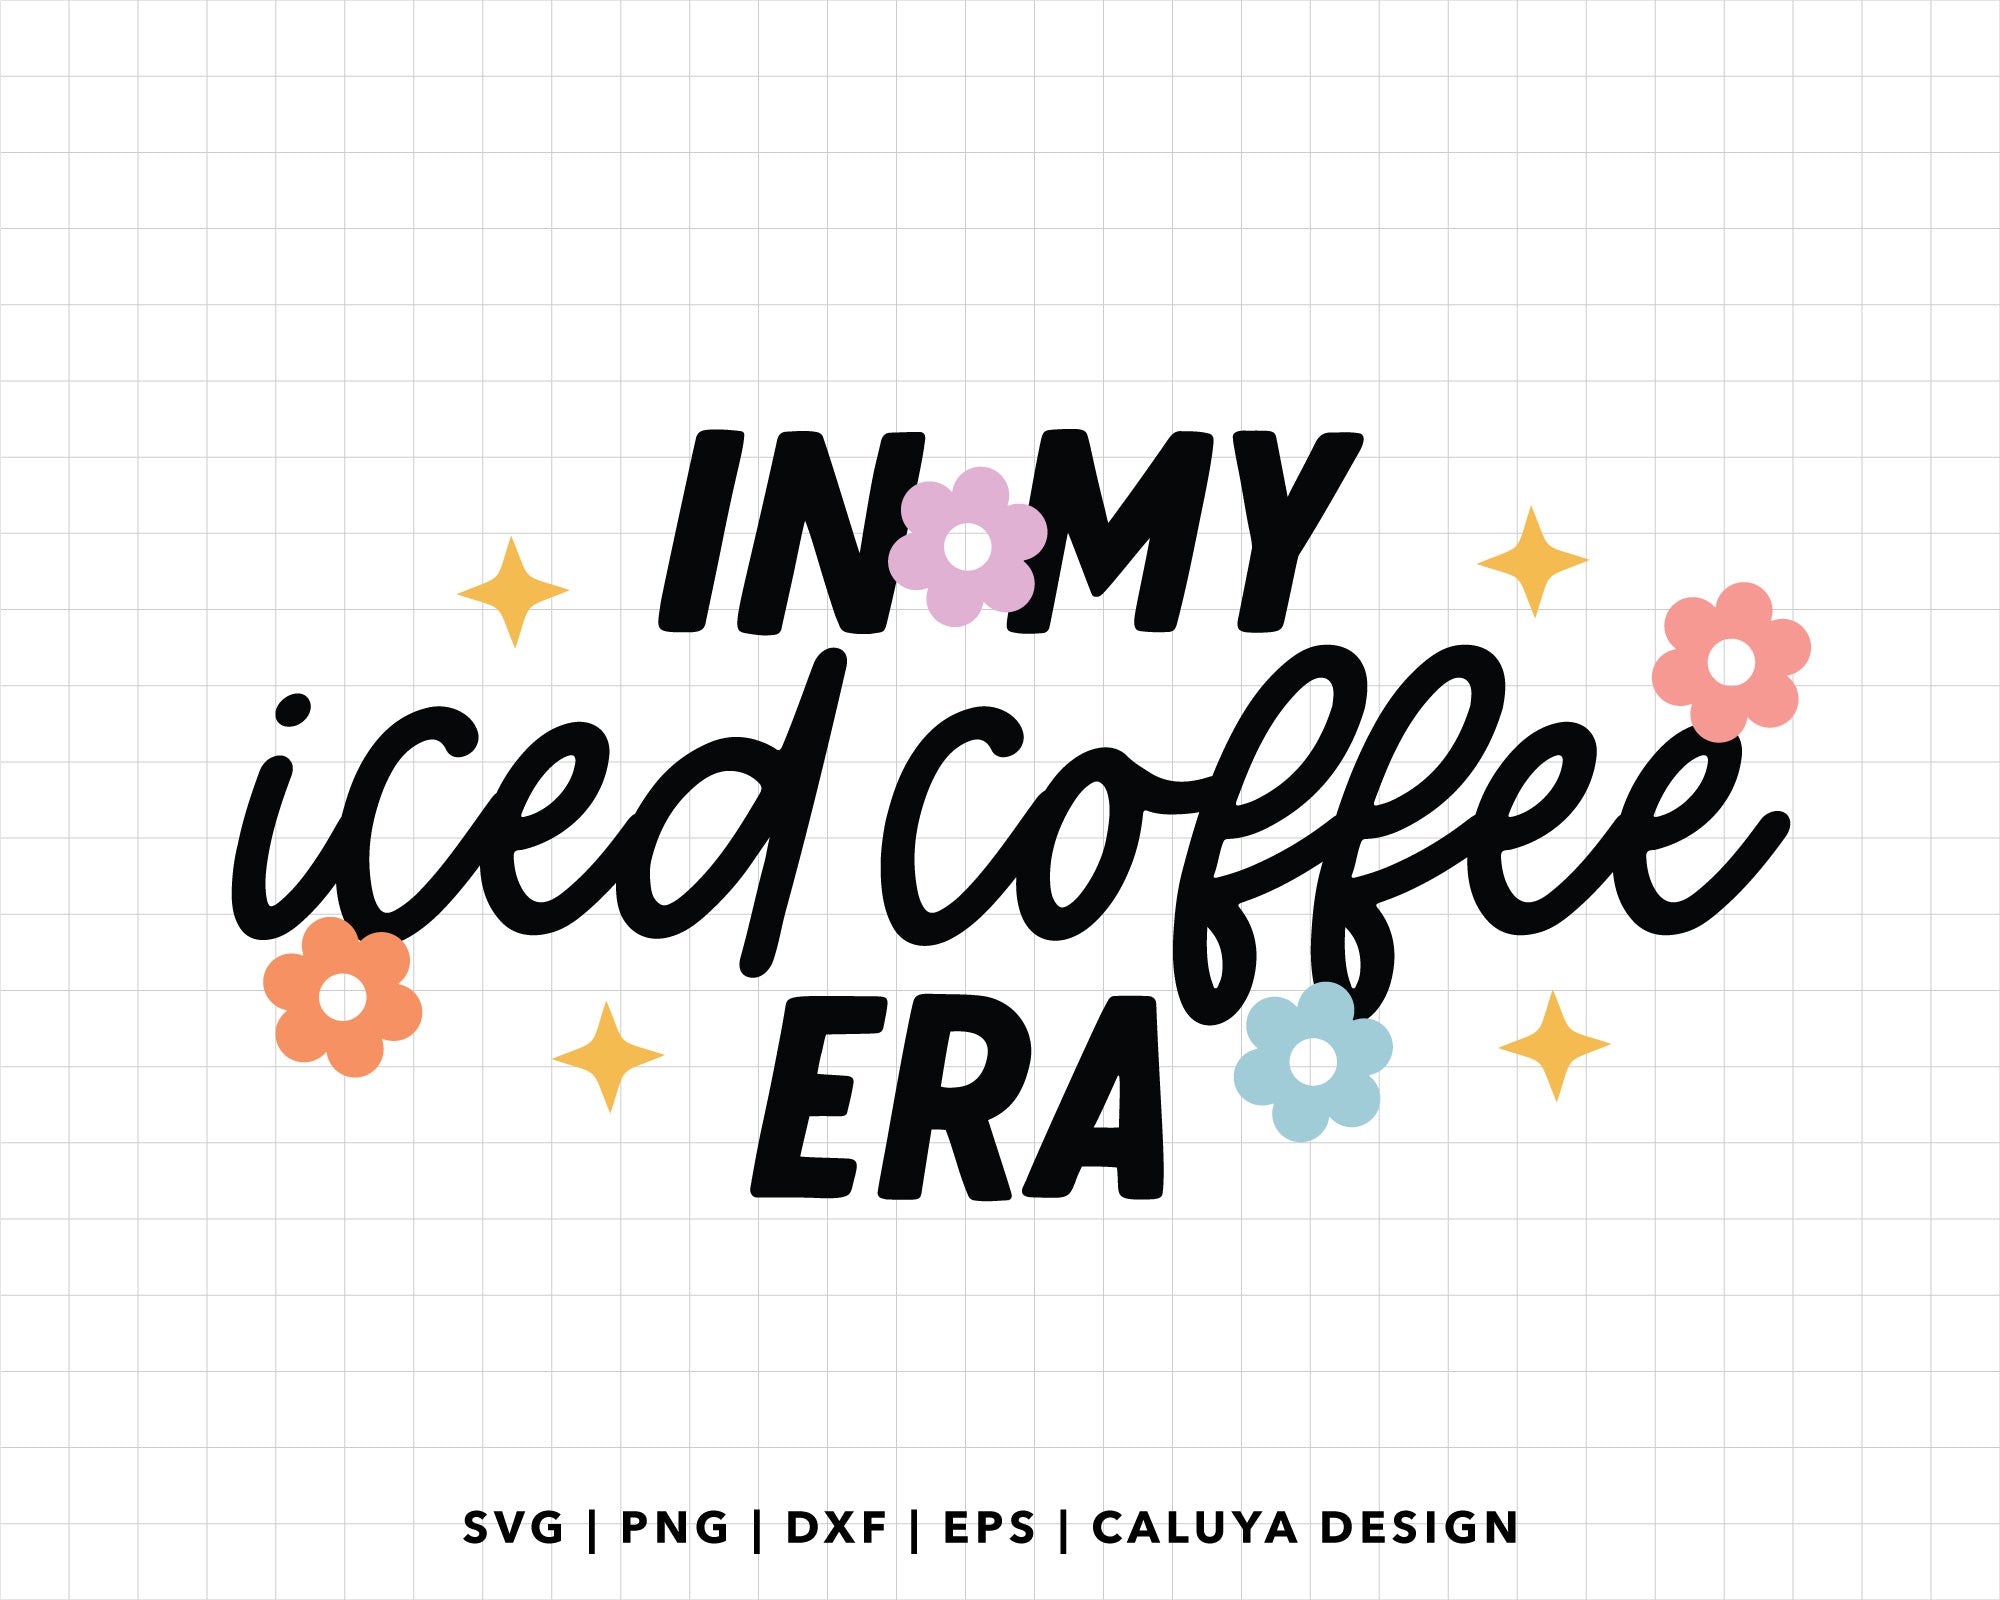 Coffee Cups SVG, Coffee Lover SVG, I Love Coffee SVG, Iced Coffee